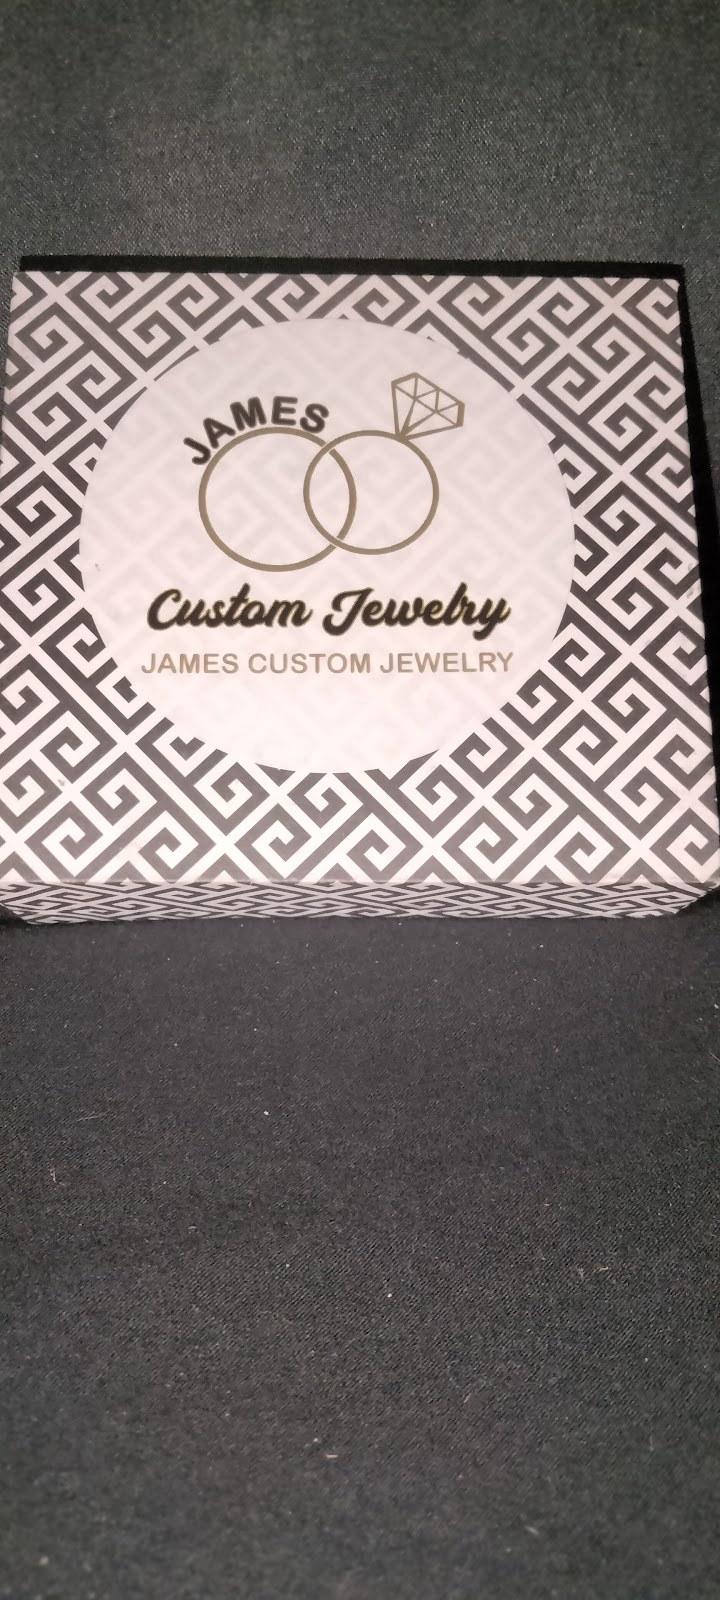 James custom jewelry | 505 S Charleston Ave Apt A, Lawnside, NJ 08045 | Phone: (609) 591-0164